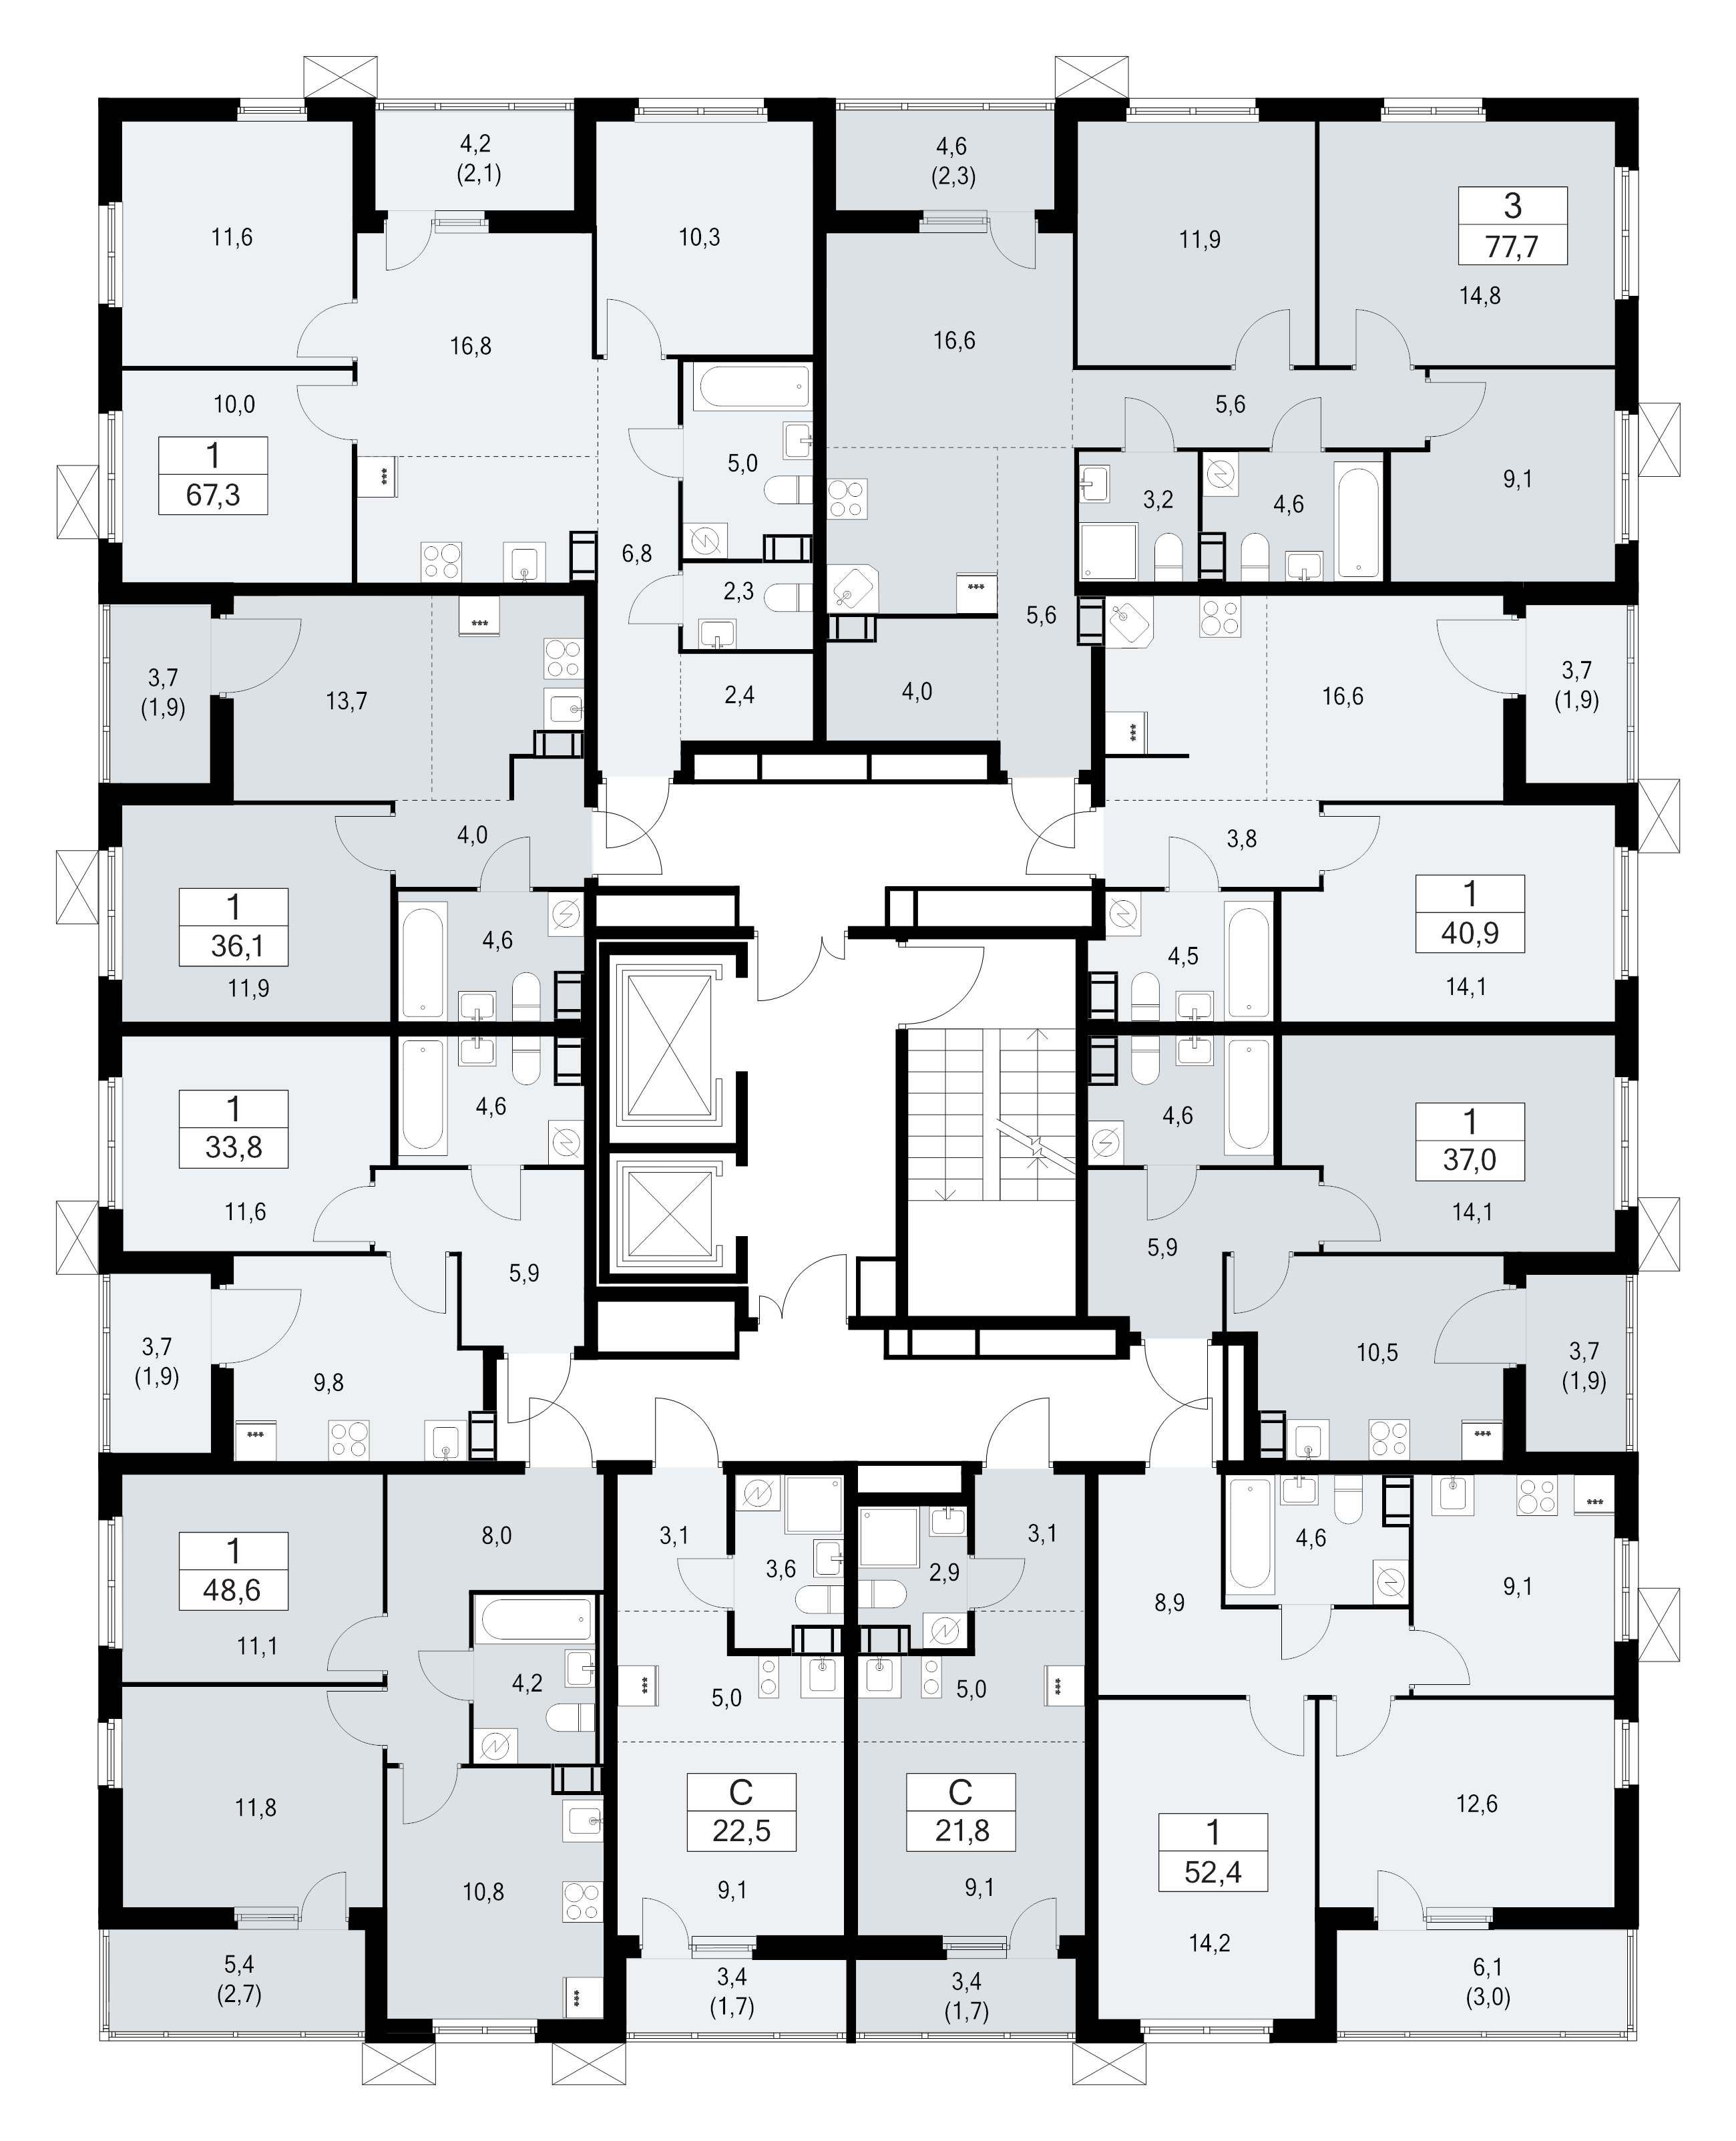 2-комнатная (Евро) квартира, 40.9 м² - планировка этажа